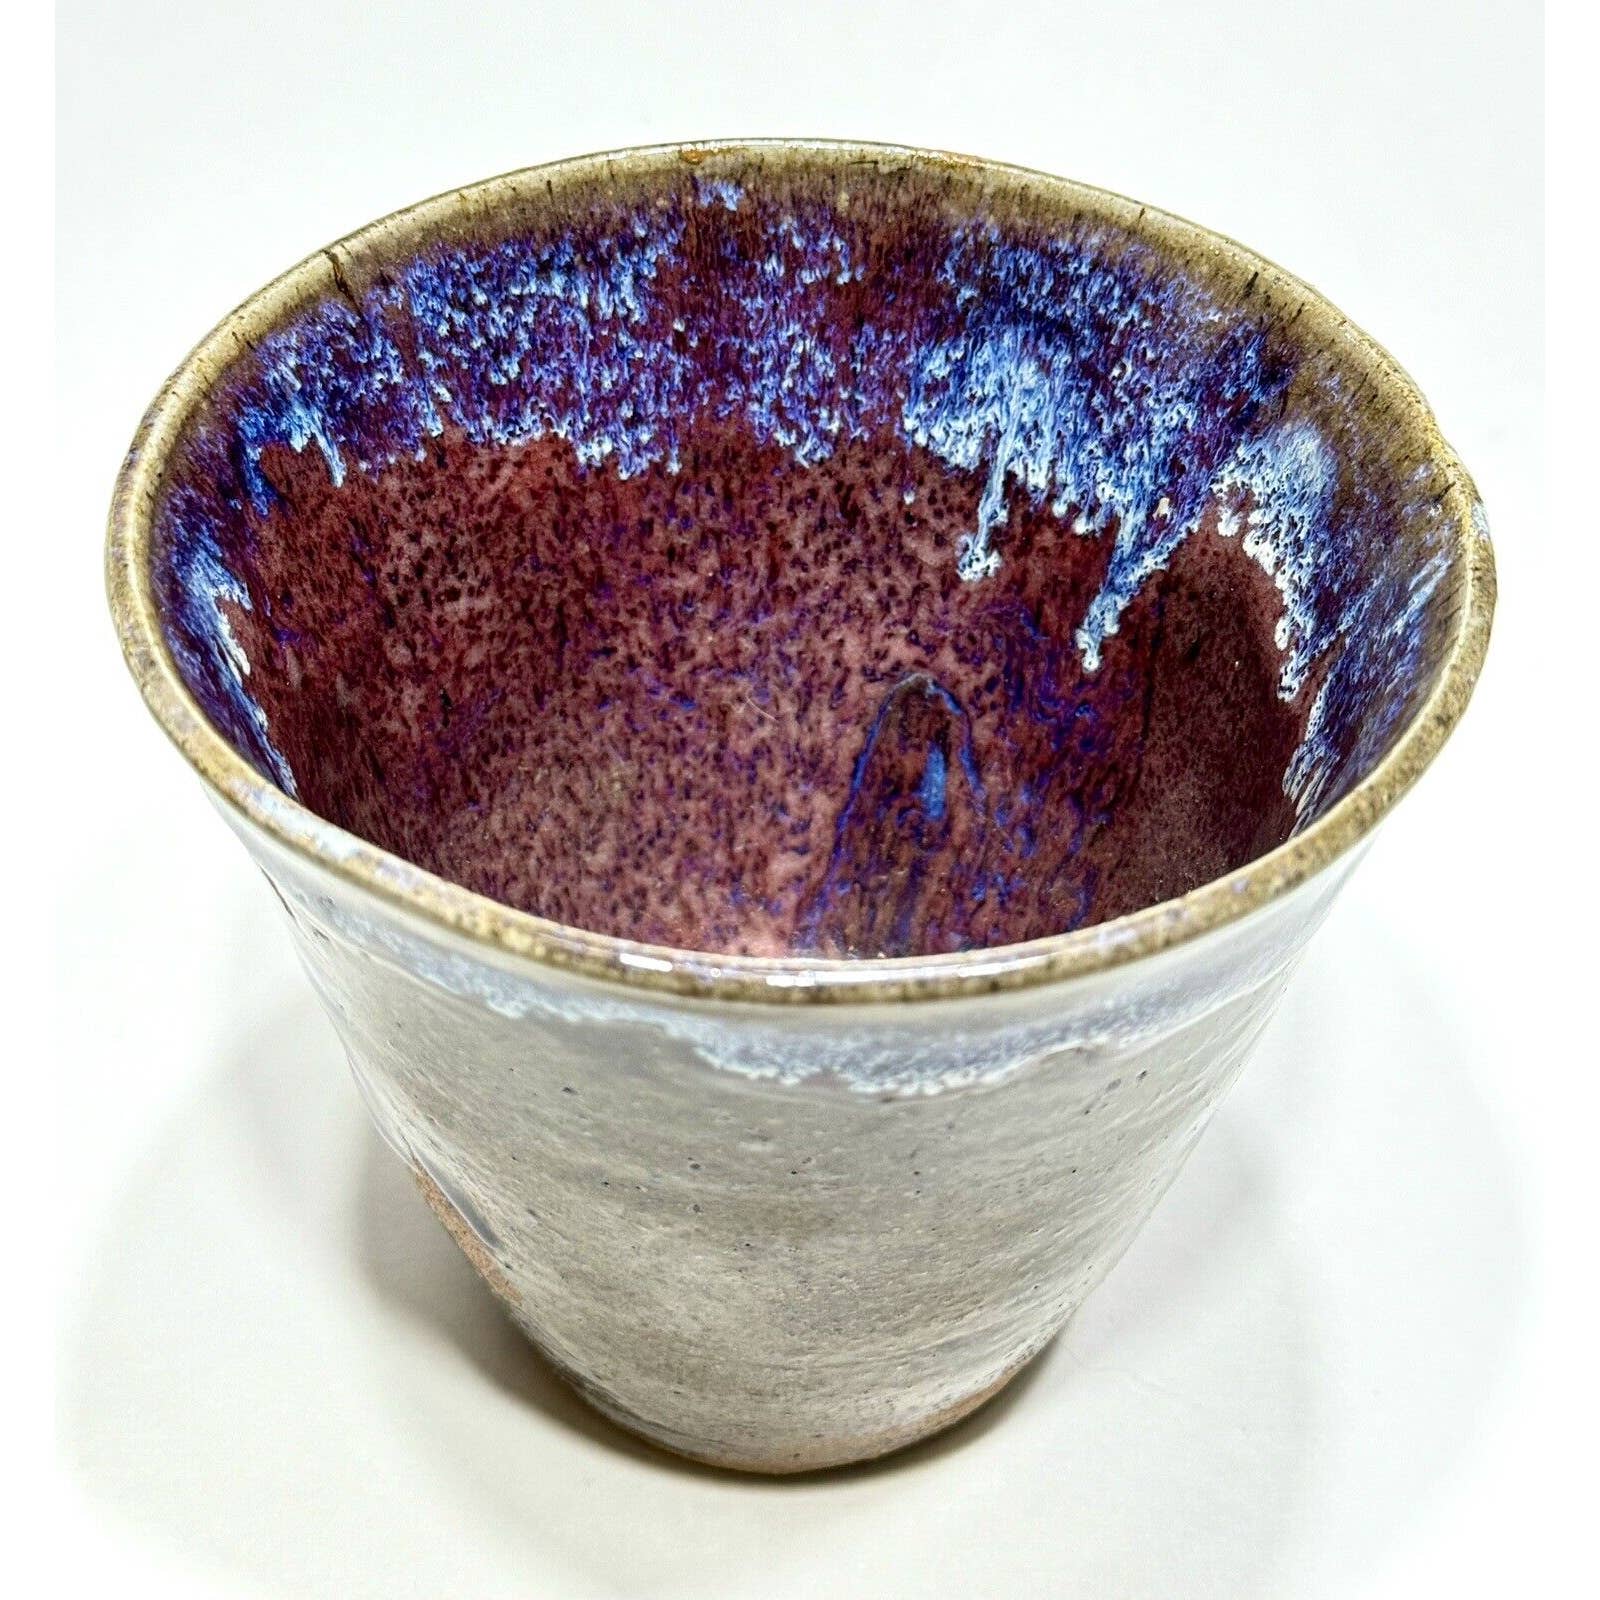 KingVintage Art Pottery Drip Glaze Iridescent Stoneware Planter Signed J King ‘02 - Black Dog Vintage